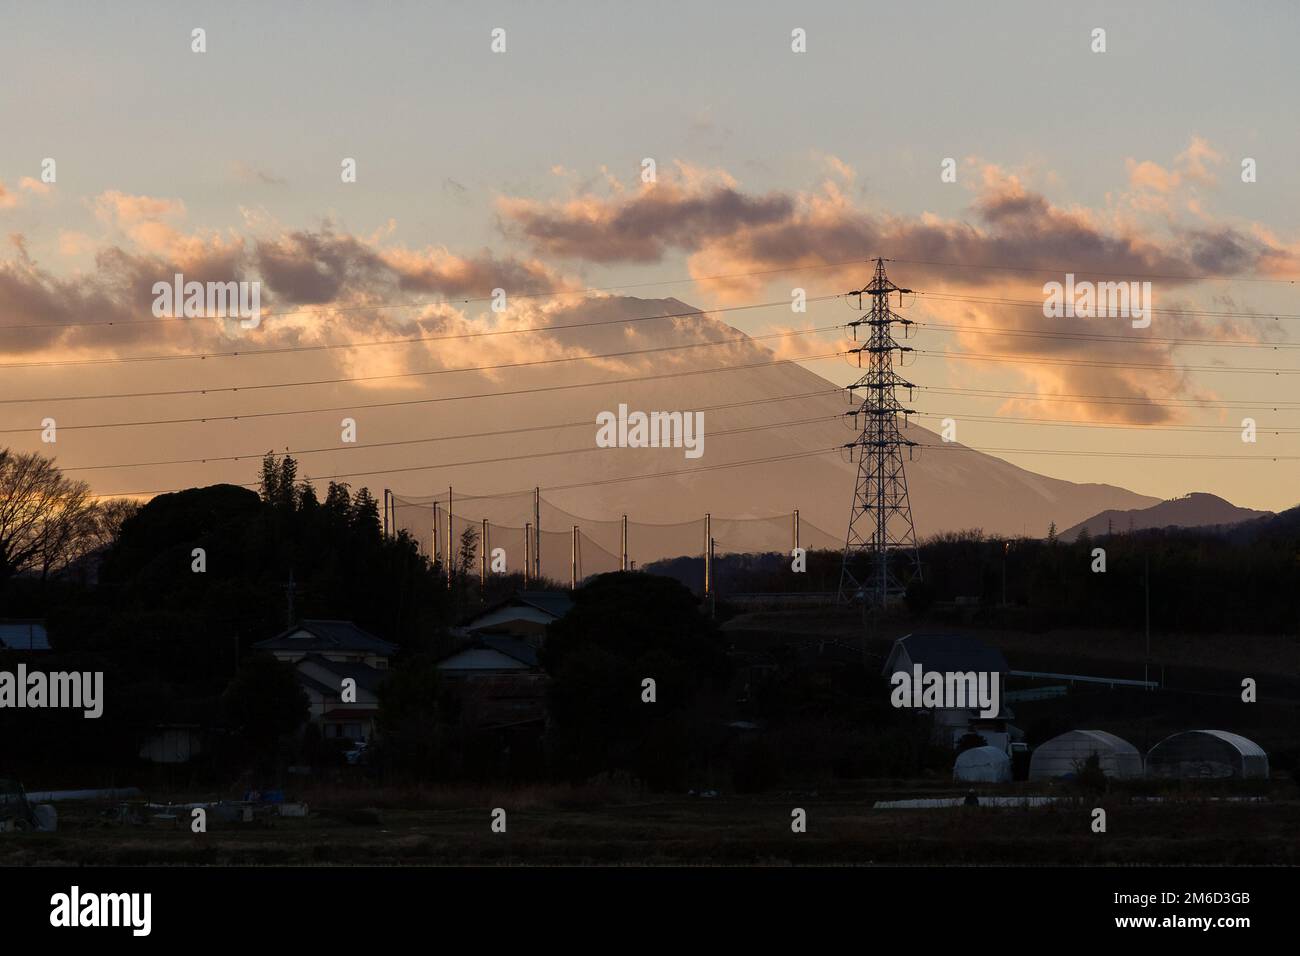 Mount Fuji at sunset behind electricity pylons and houses in rural Kanagawa, Japan. Stock Photo